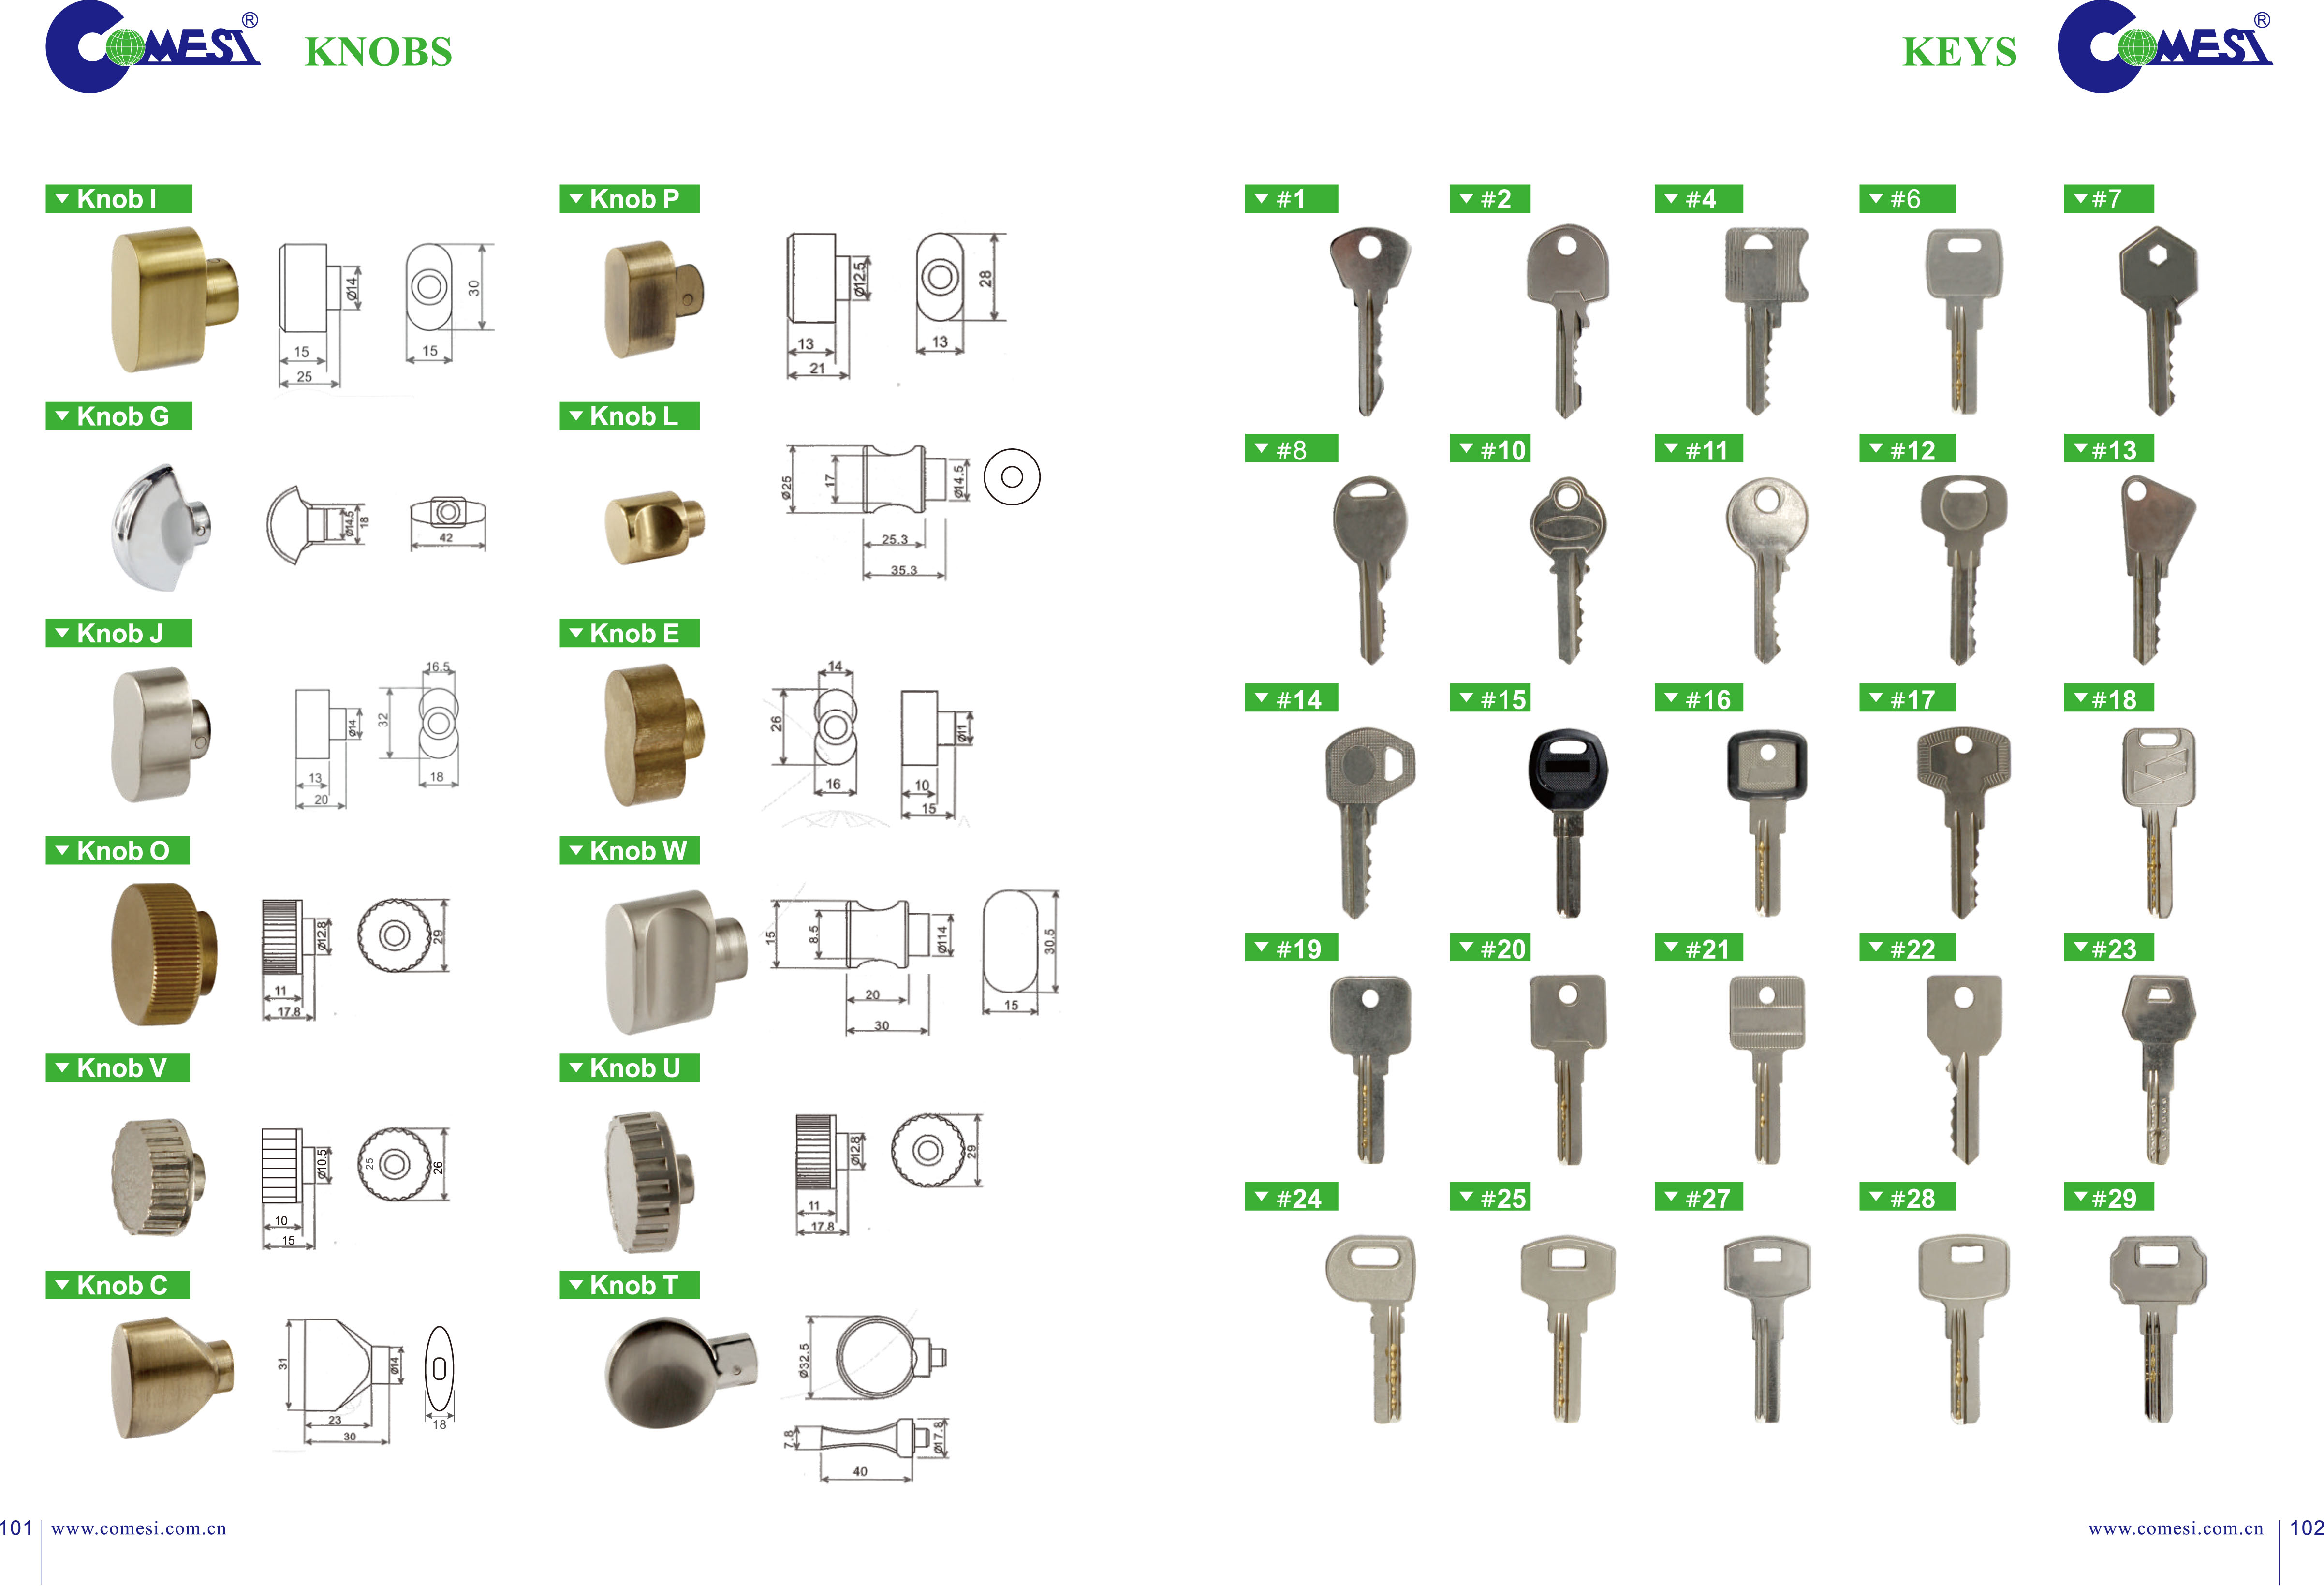 key & knobs